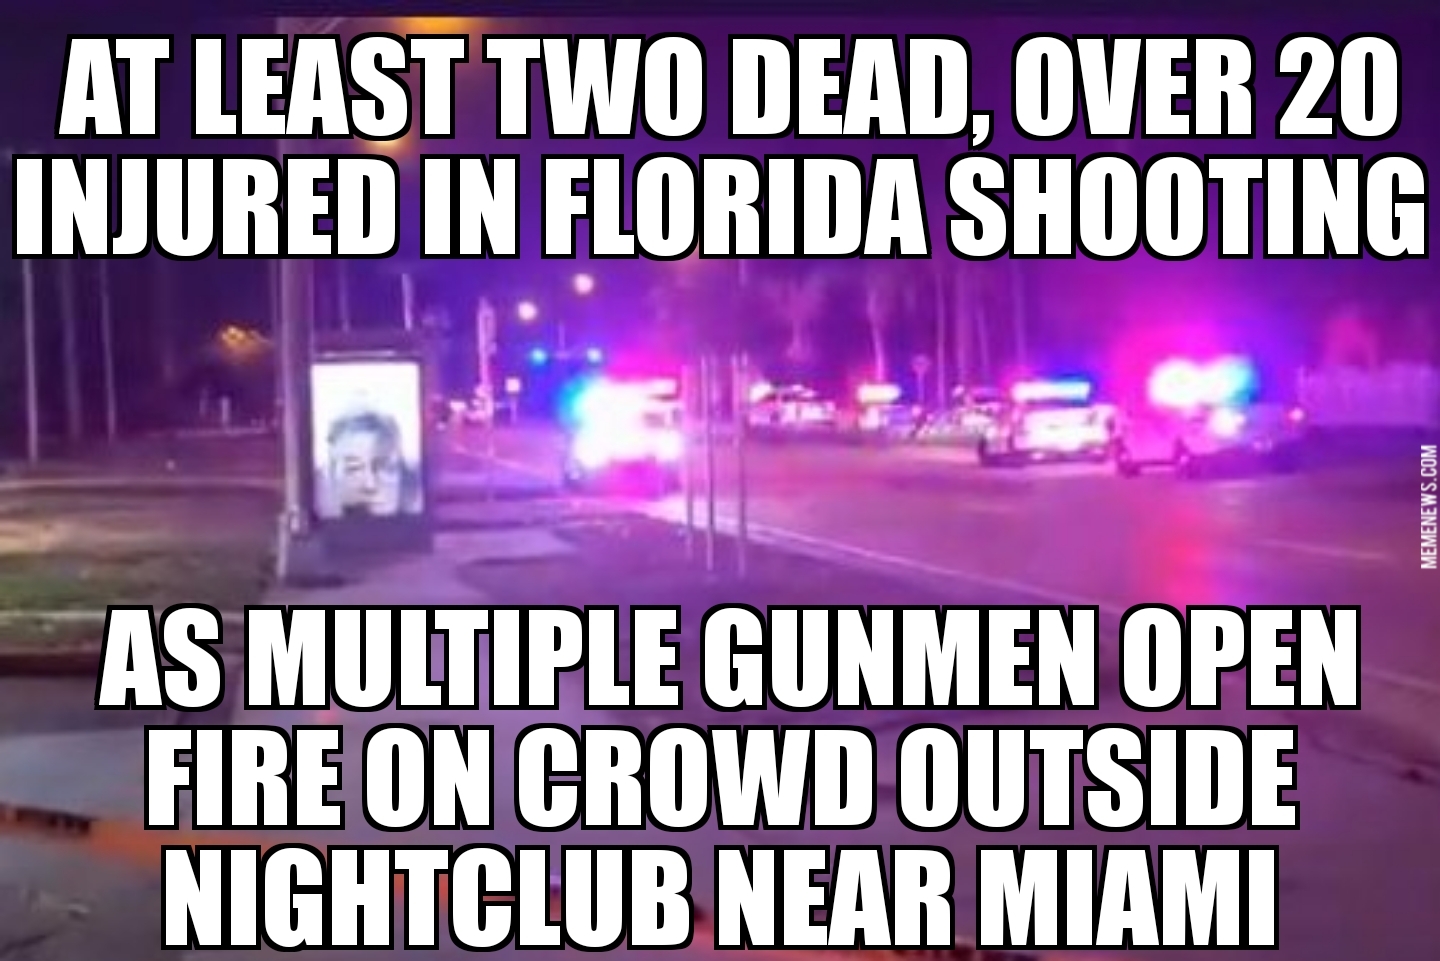 Nightclub shooting near Miami